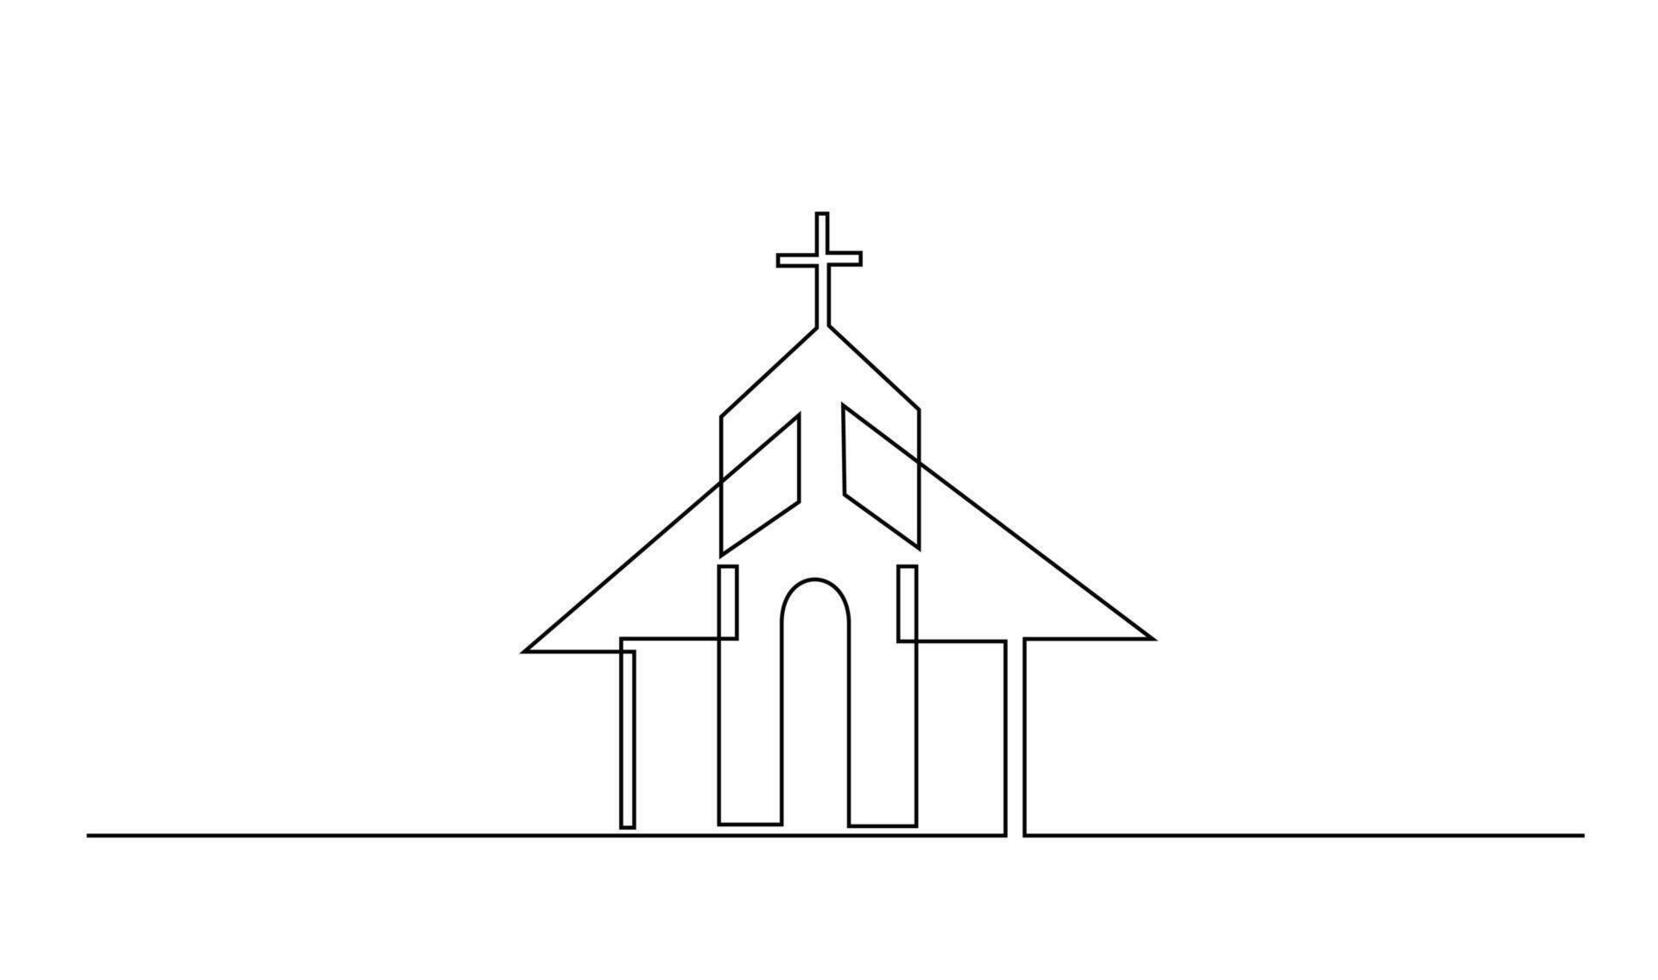 Iglesia uno línea dibujo aislado en blanco antecedentes vector